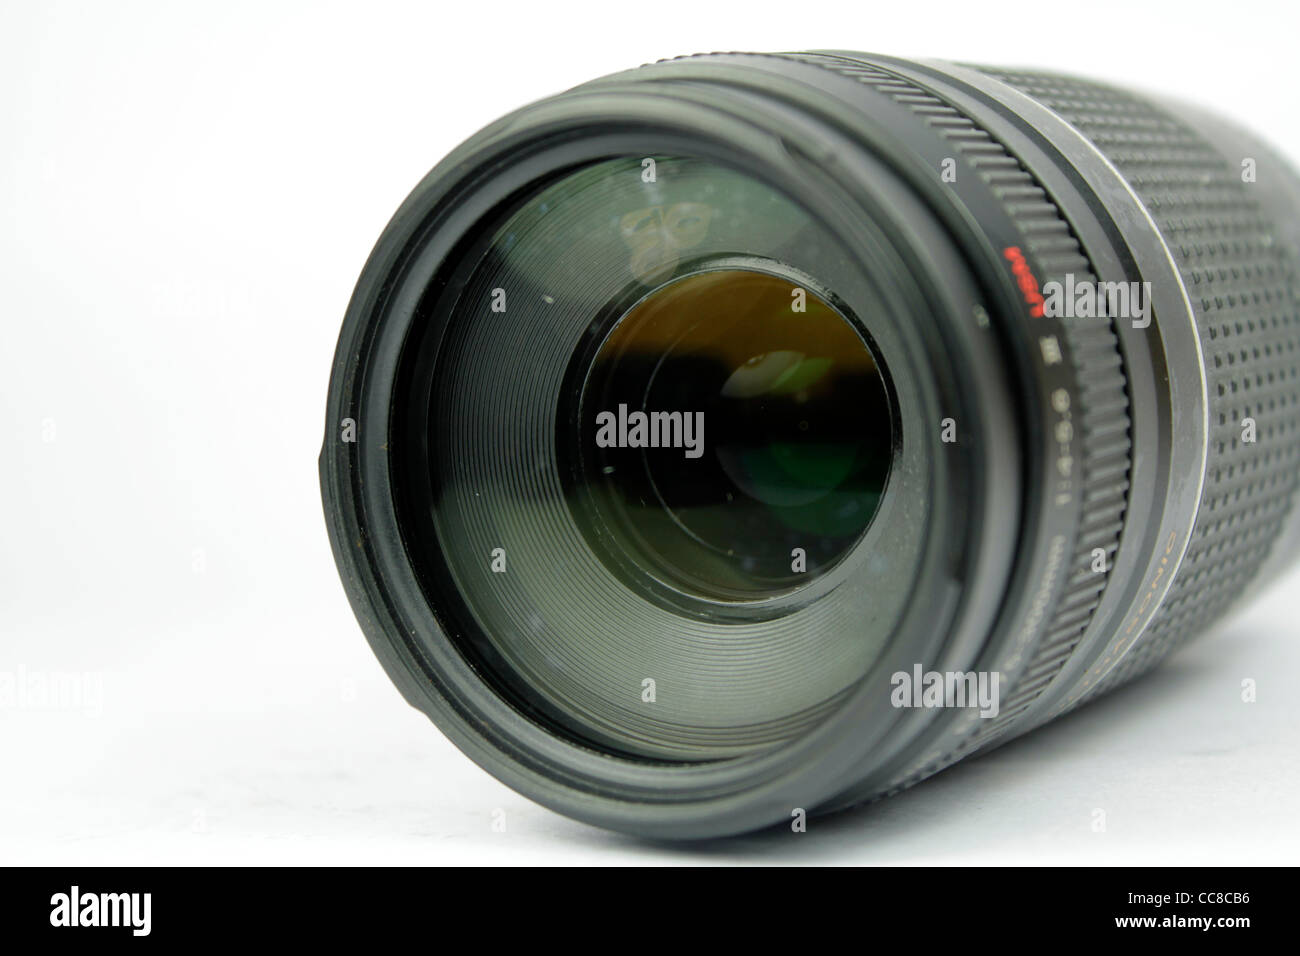 Canon 70-300 mm telephoto lens Stock Photo